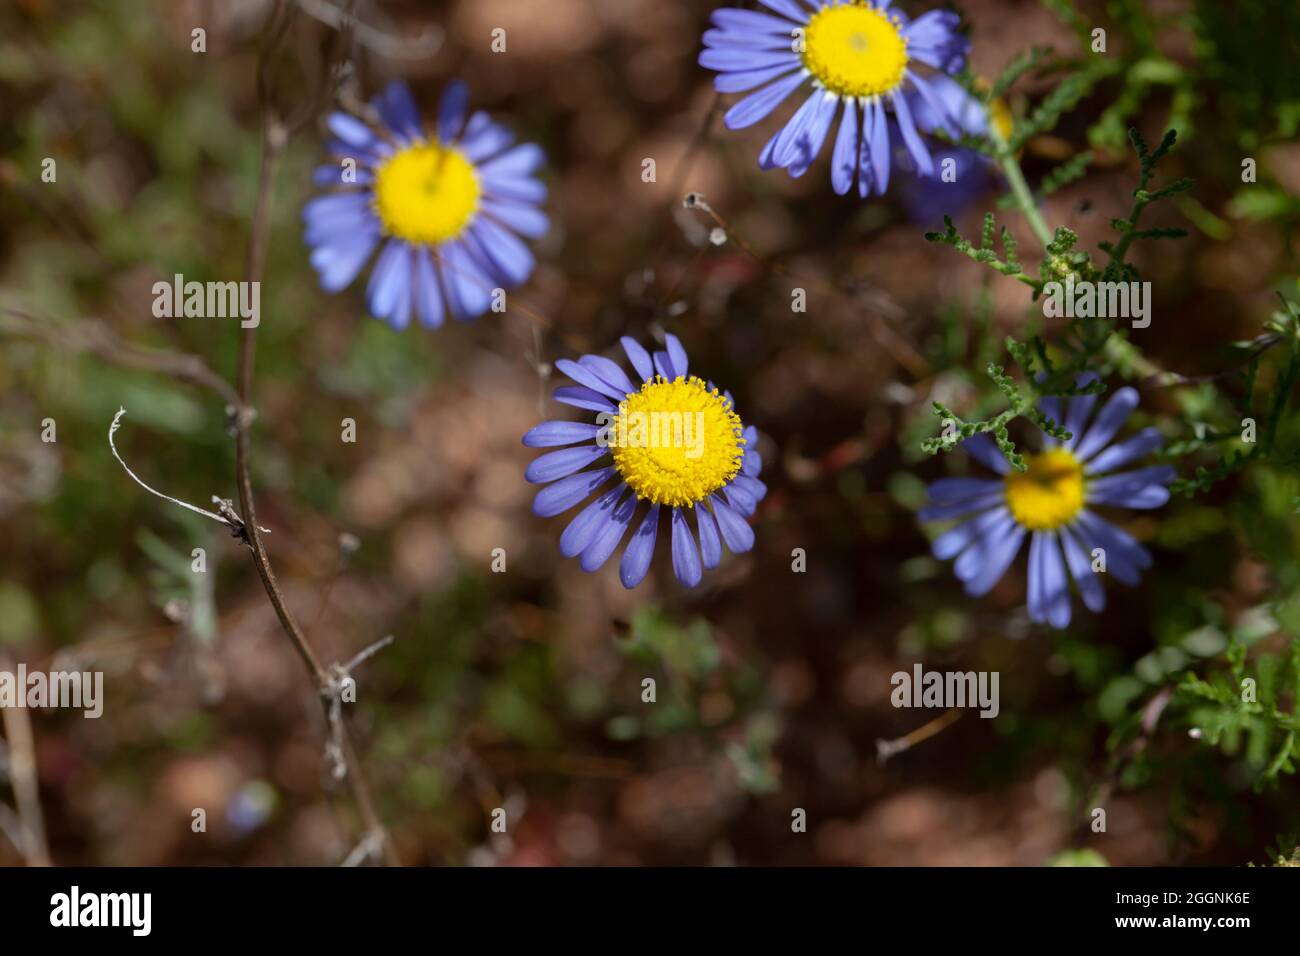 Felicia Amelloides Namaqualand blue daisies Stock Photo